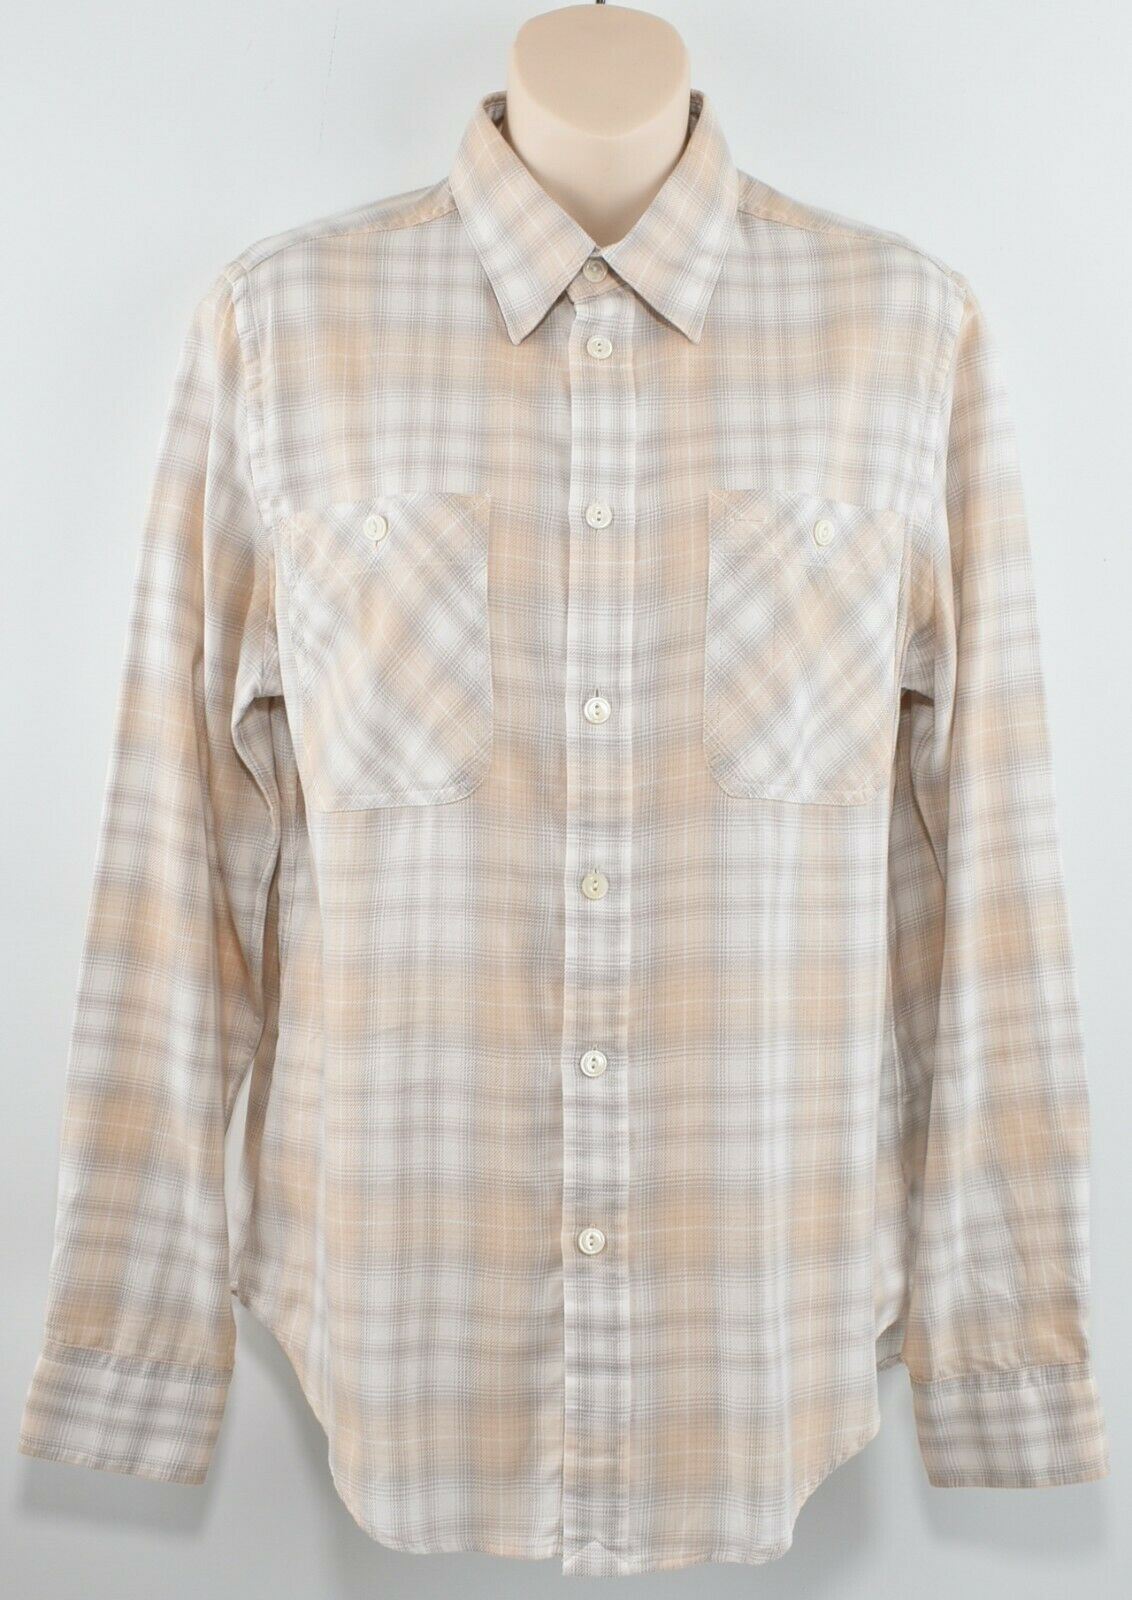 POLO RALPH LAUREN Women's Beige/Grey Checked Cotton Shirt, size L (UK 14)